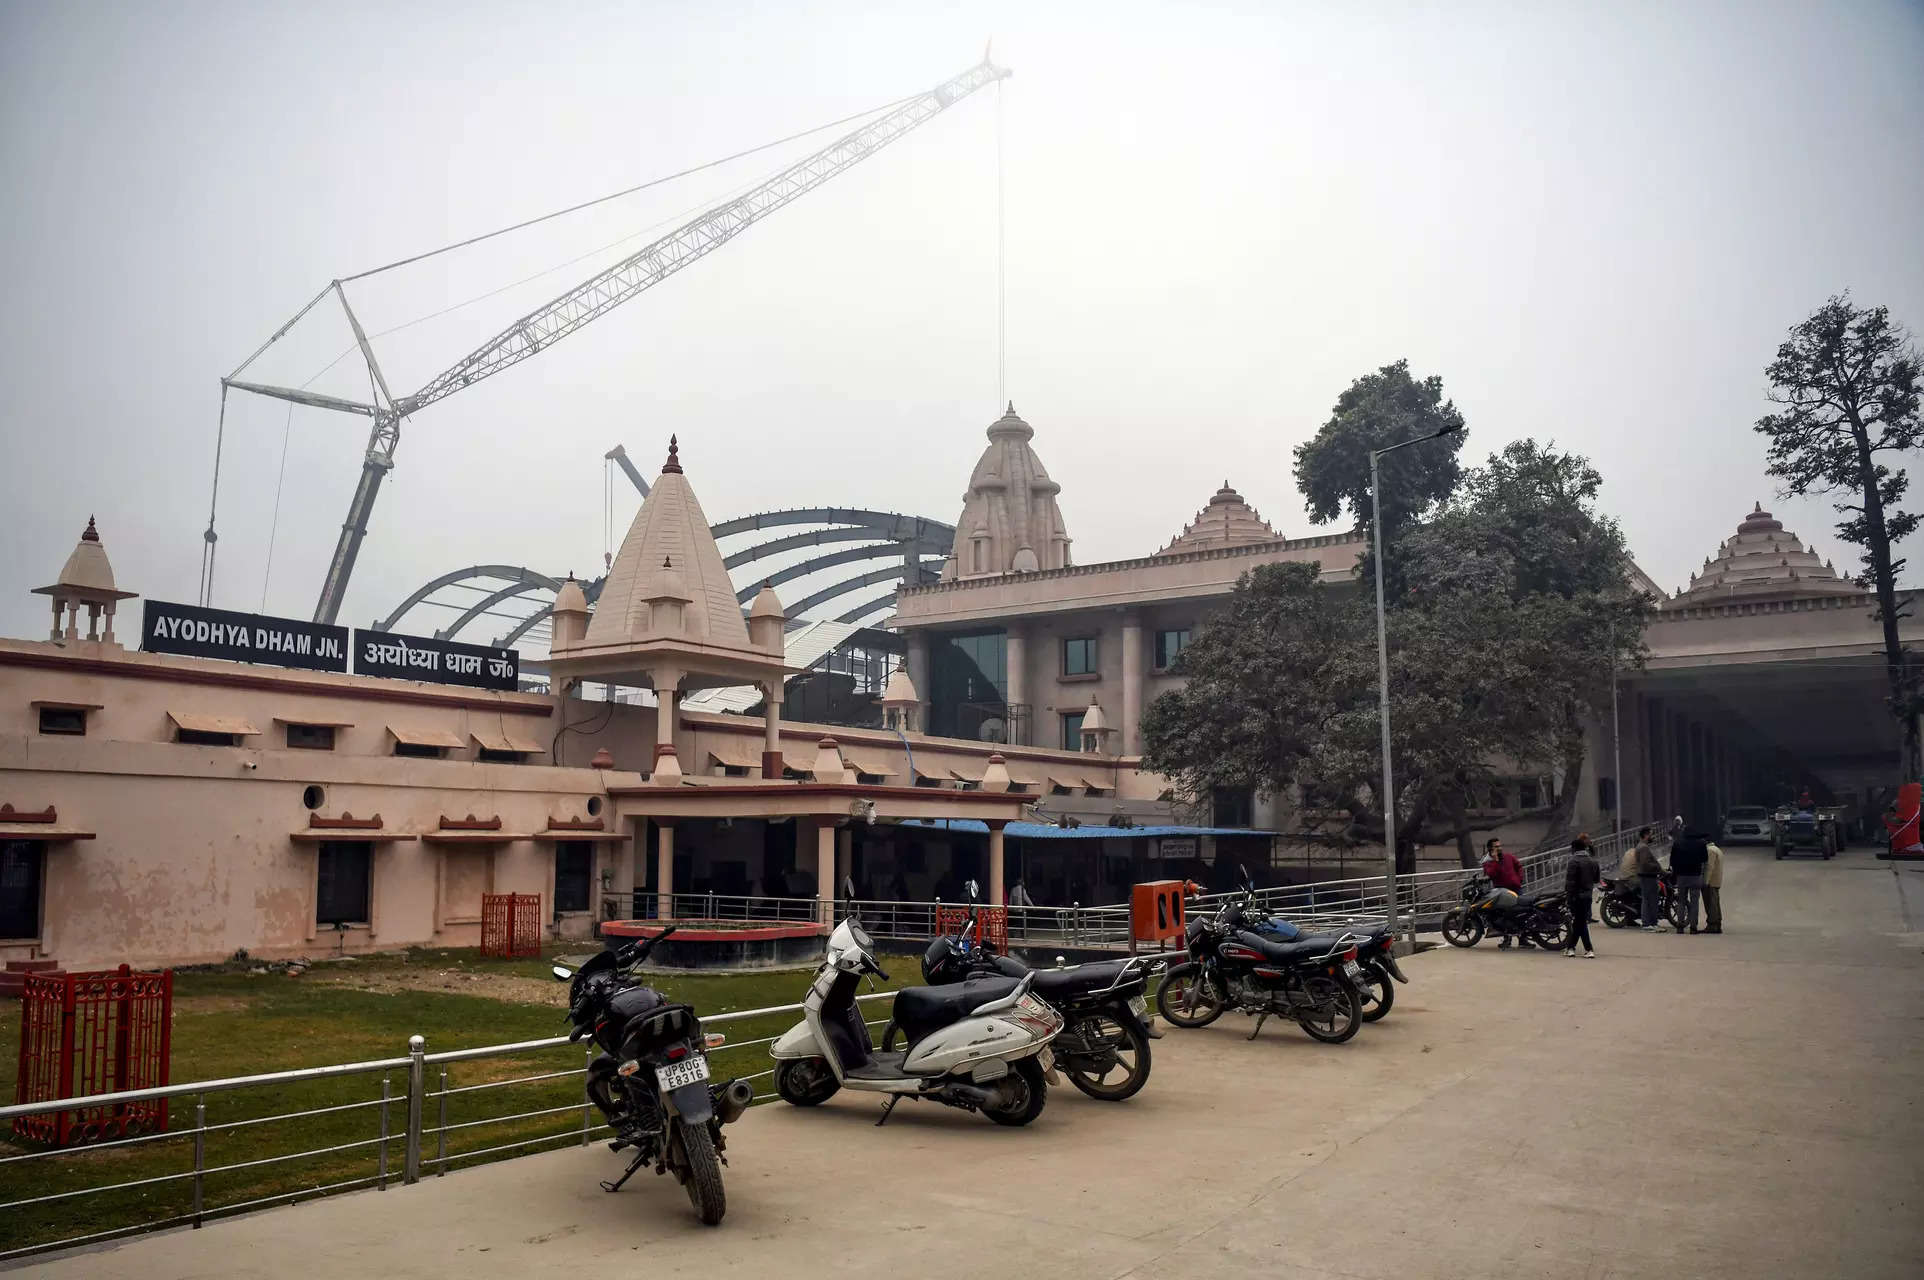 <p>Construction work underway at the Ayodhya Dham Junction ahead of the Pran Pratishtha ceremony of the Ram Janmabhoomi Temple, in Ayodhya. (ANI Photo/Ishant)</p>